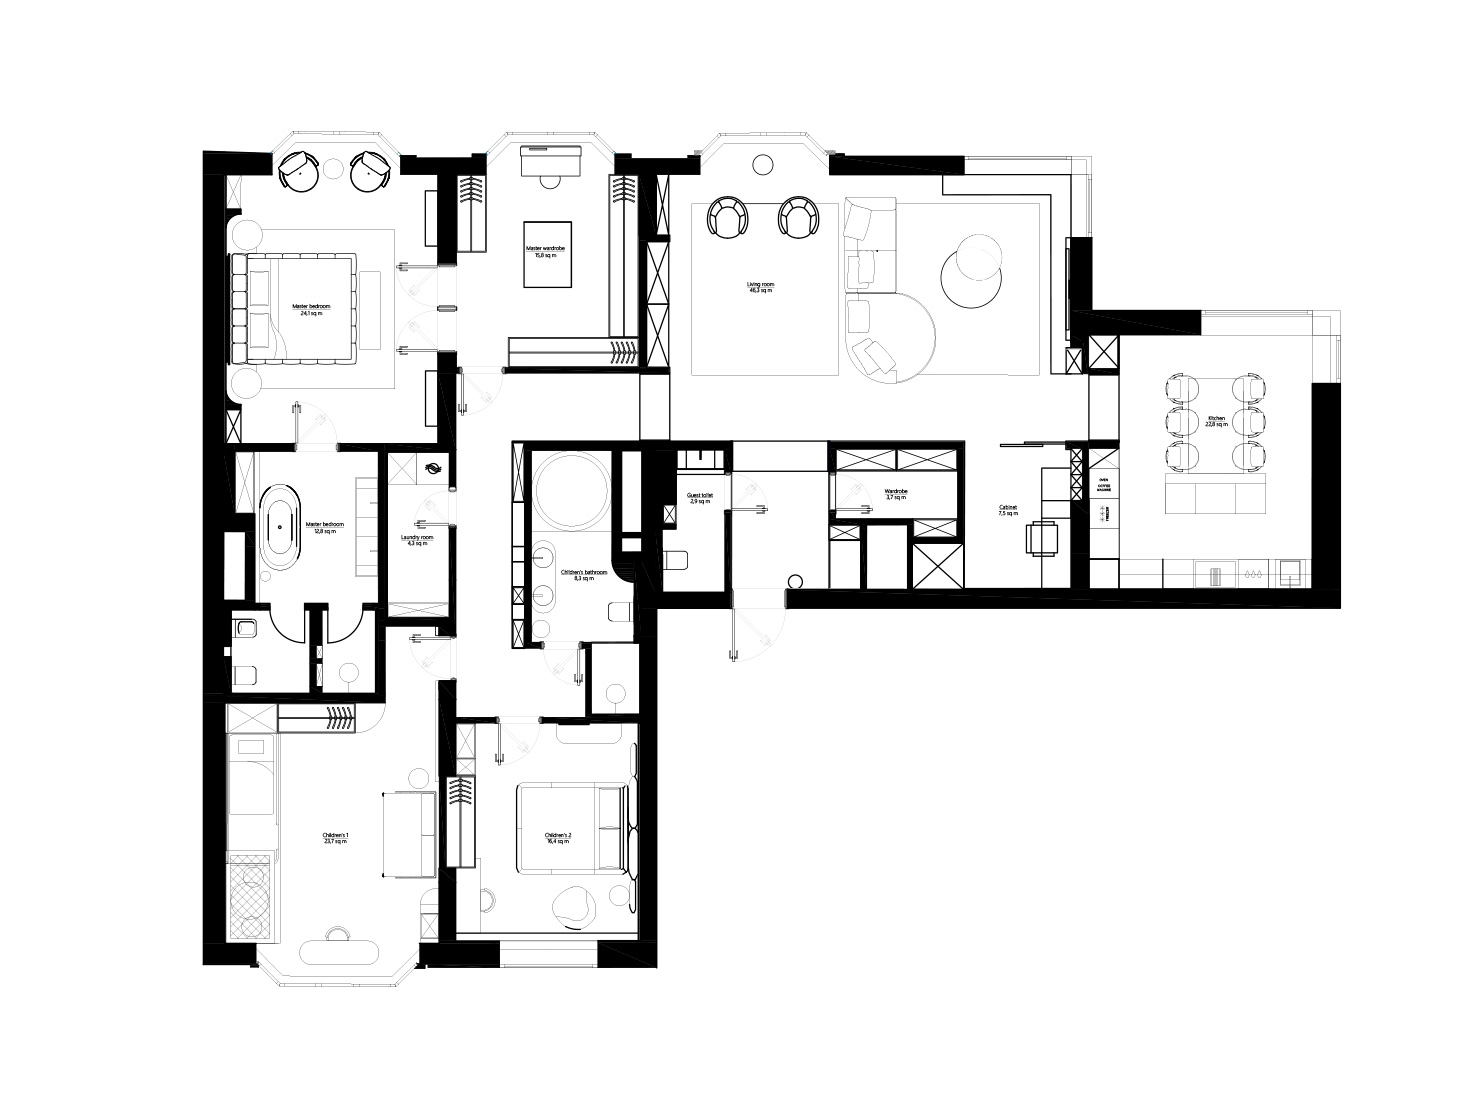 Quadro Room,大平层设计,190㎡,莫斯科,大平层装修,轻奢风格,大平层设计案例,Quadro Room设计案例,Quadro Room作品